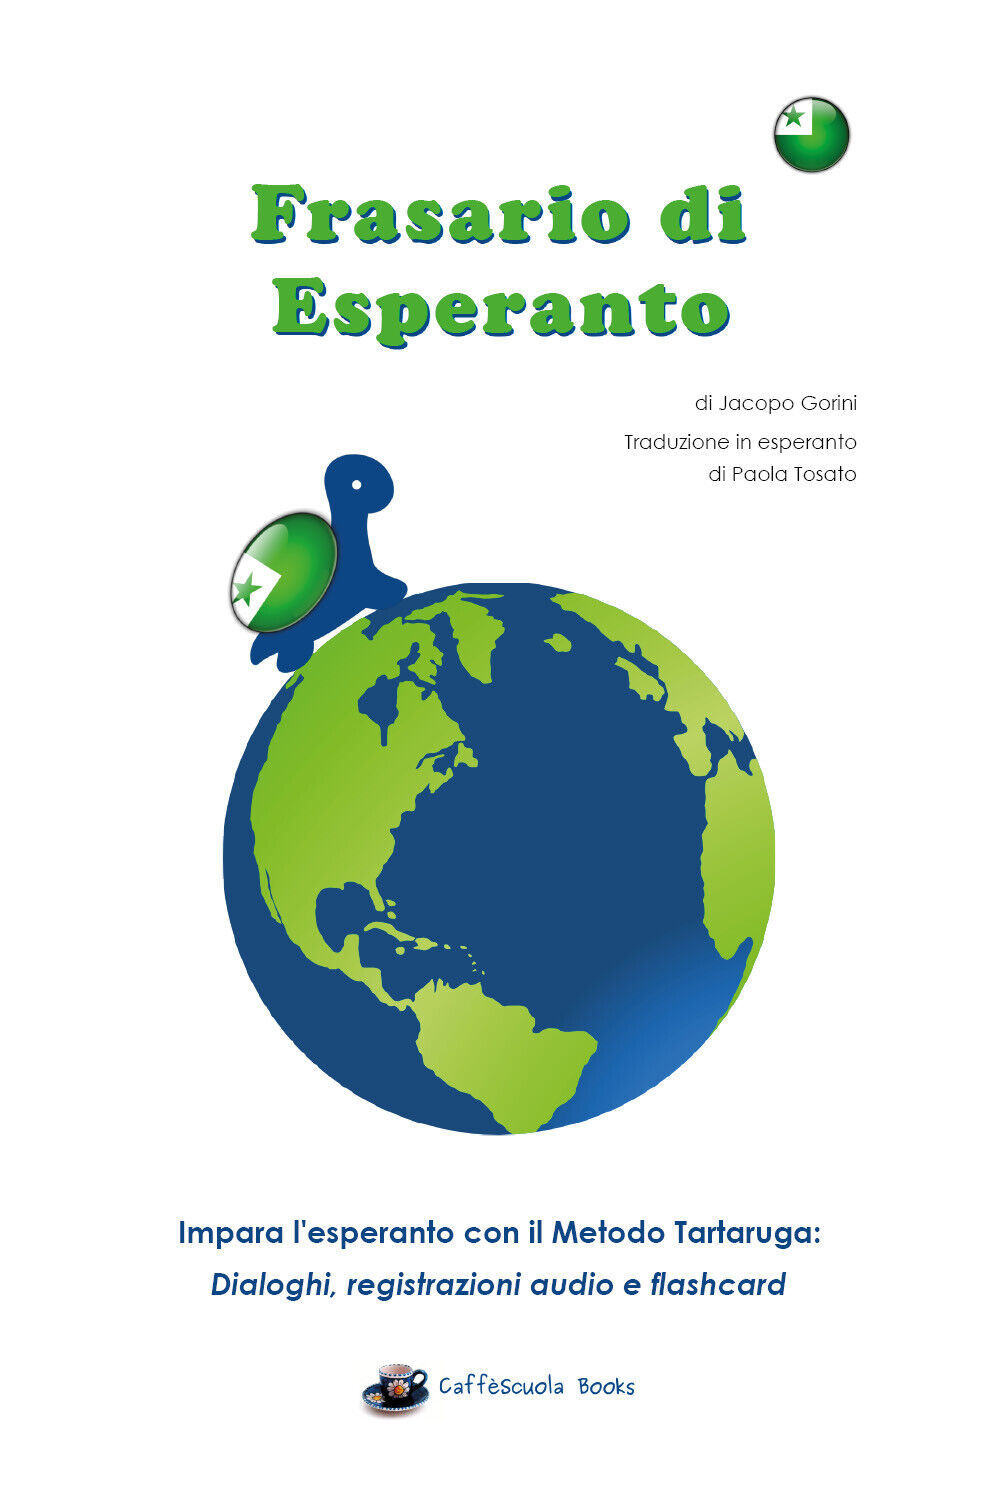 Frasario da viaggio Esperanto-Italiano - Jacopo Gorini,  Youcanprint - P libro usato